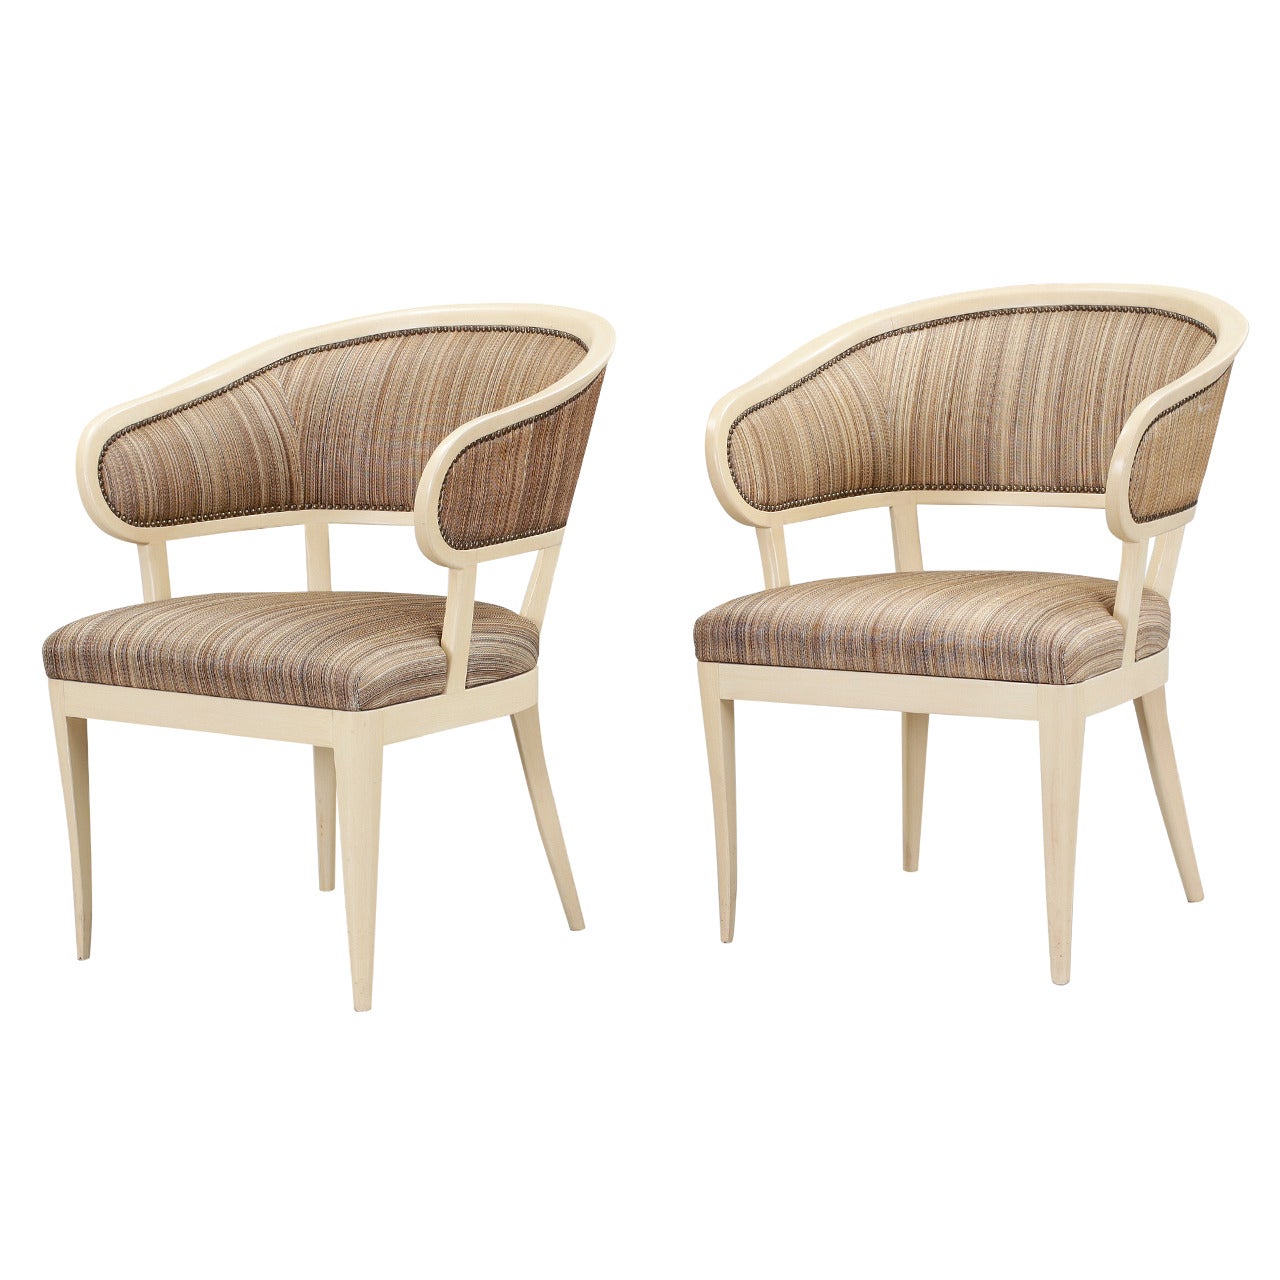 Pair of "Jonas Love" Chairs by Carl Malmsten